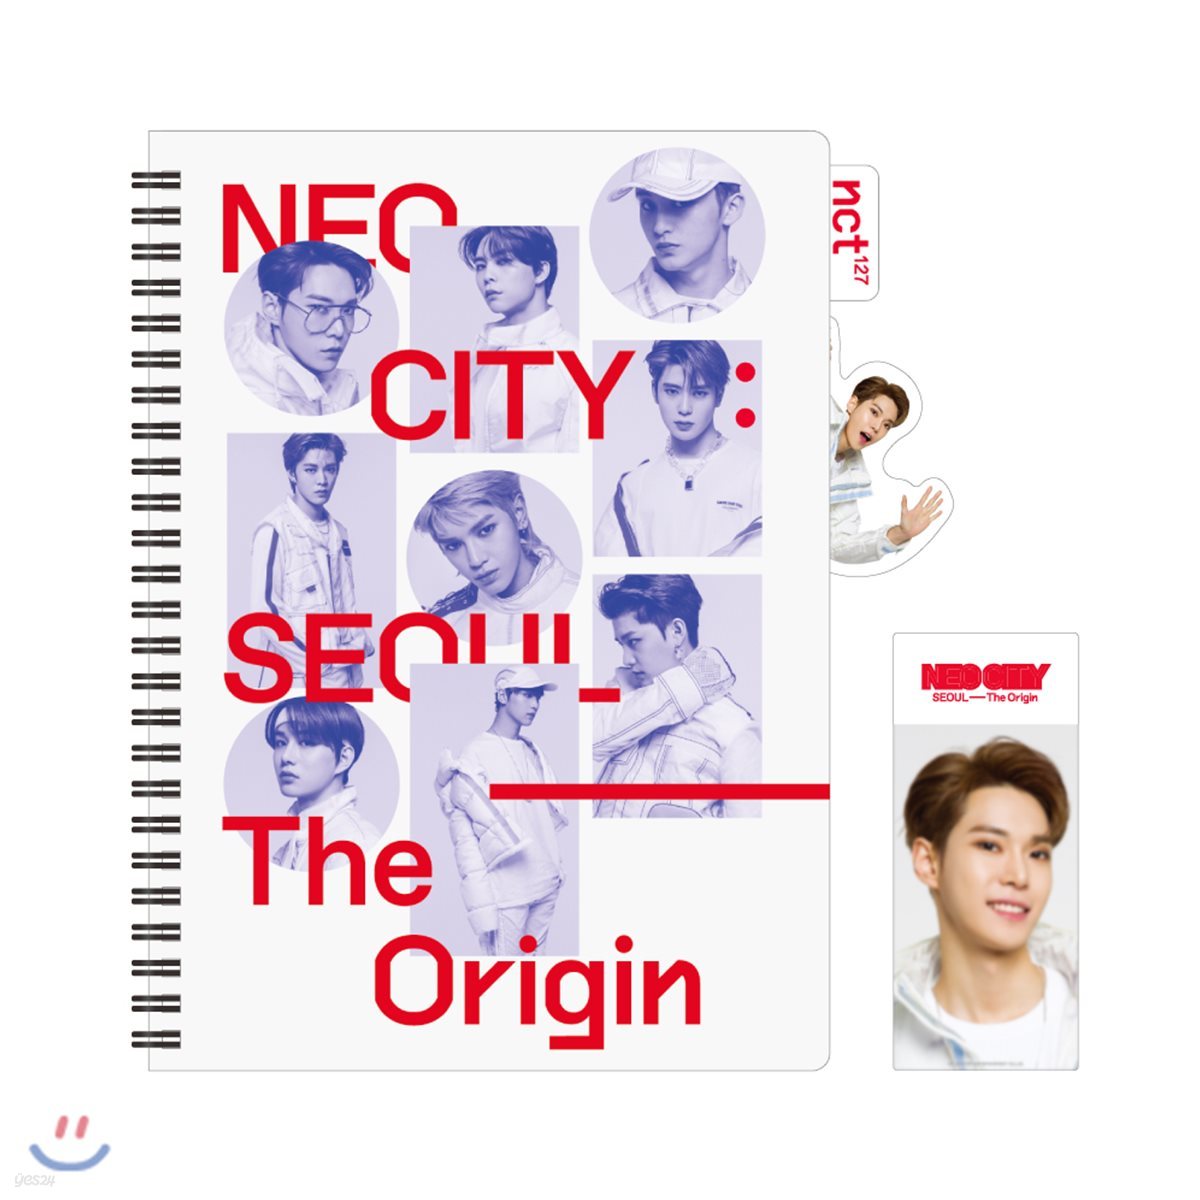 NCT 127 [NEO CITY : SEOUL - The Origin]- 인덱스노트+북마크 [도영]